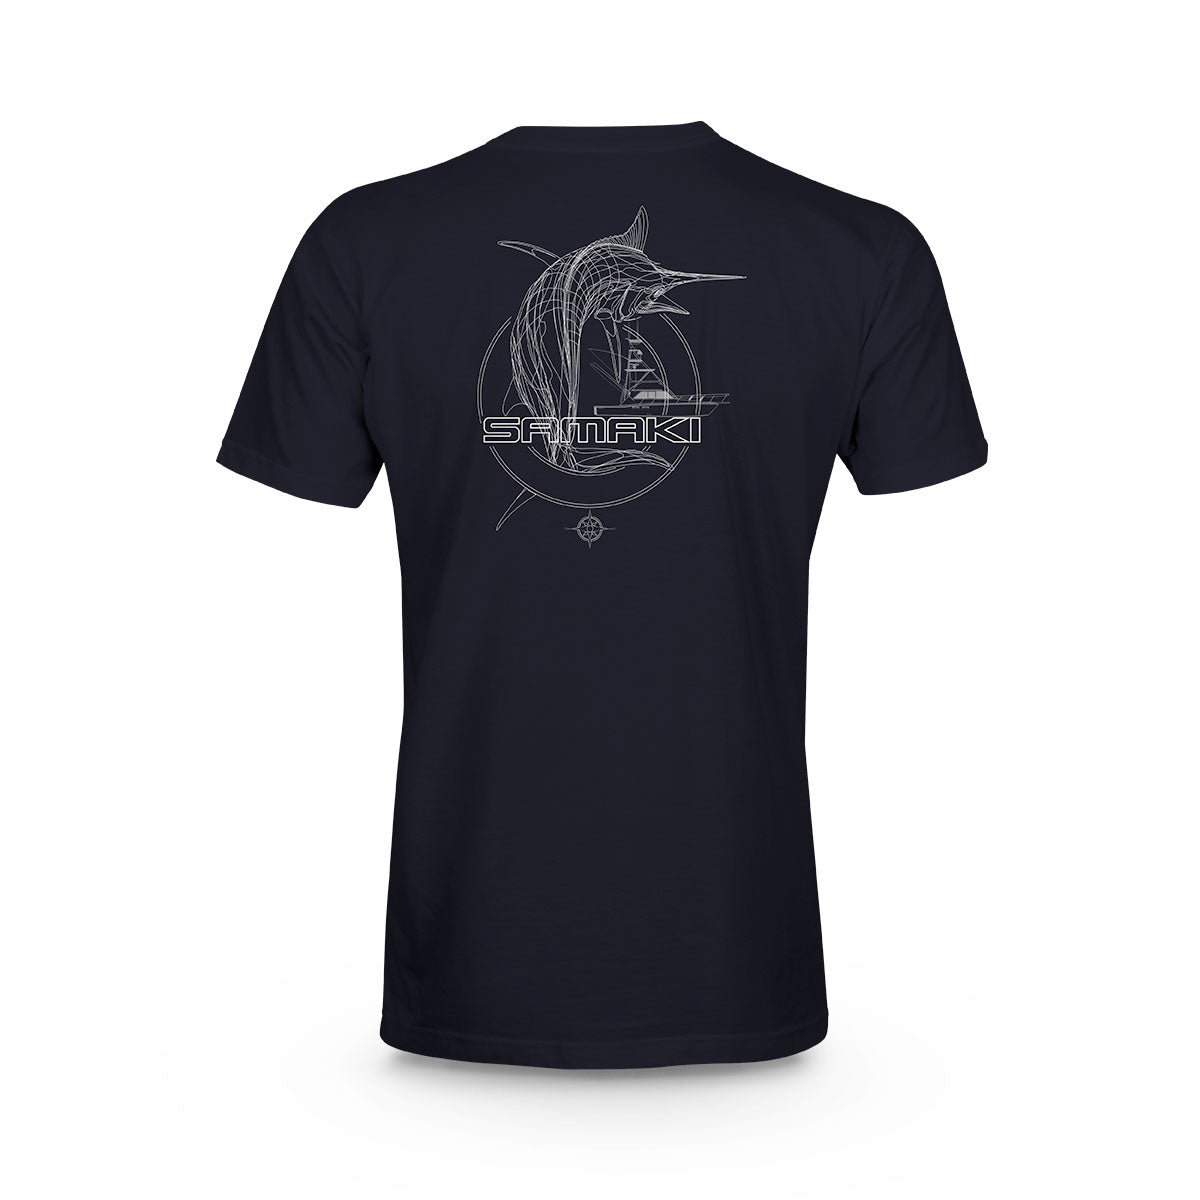 Marlin Lines T-Shirt